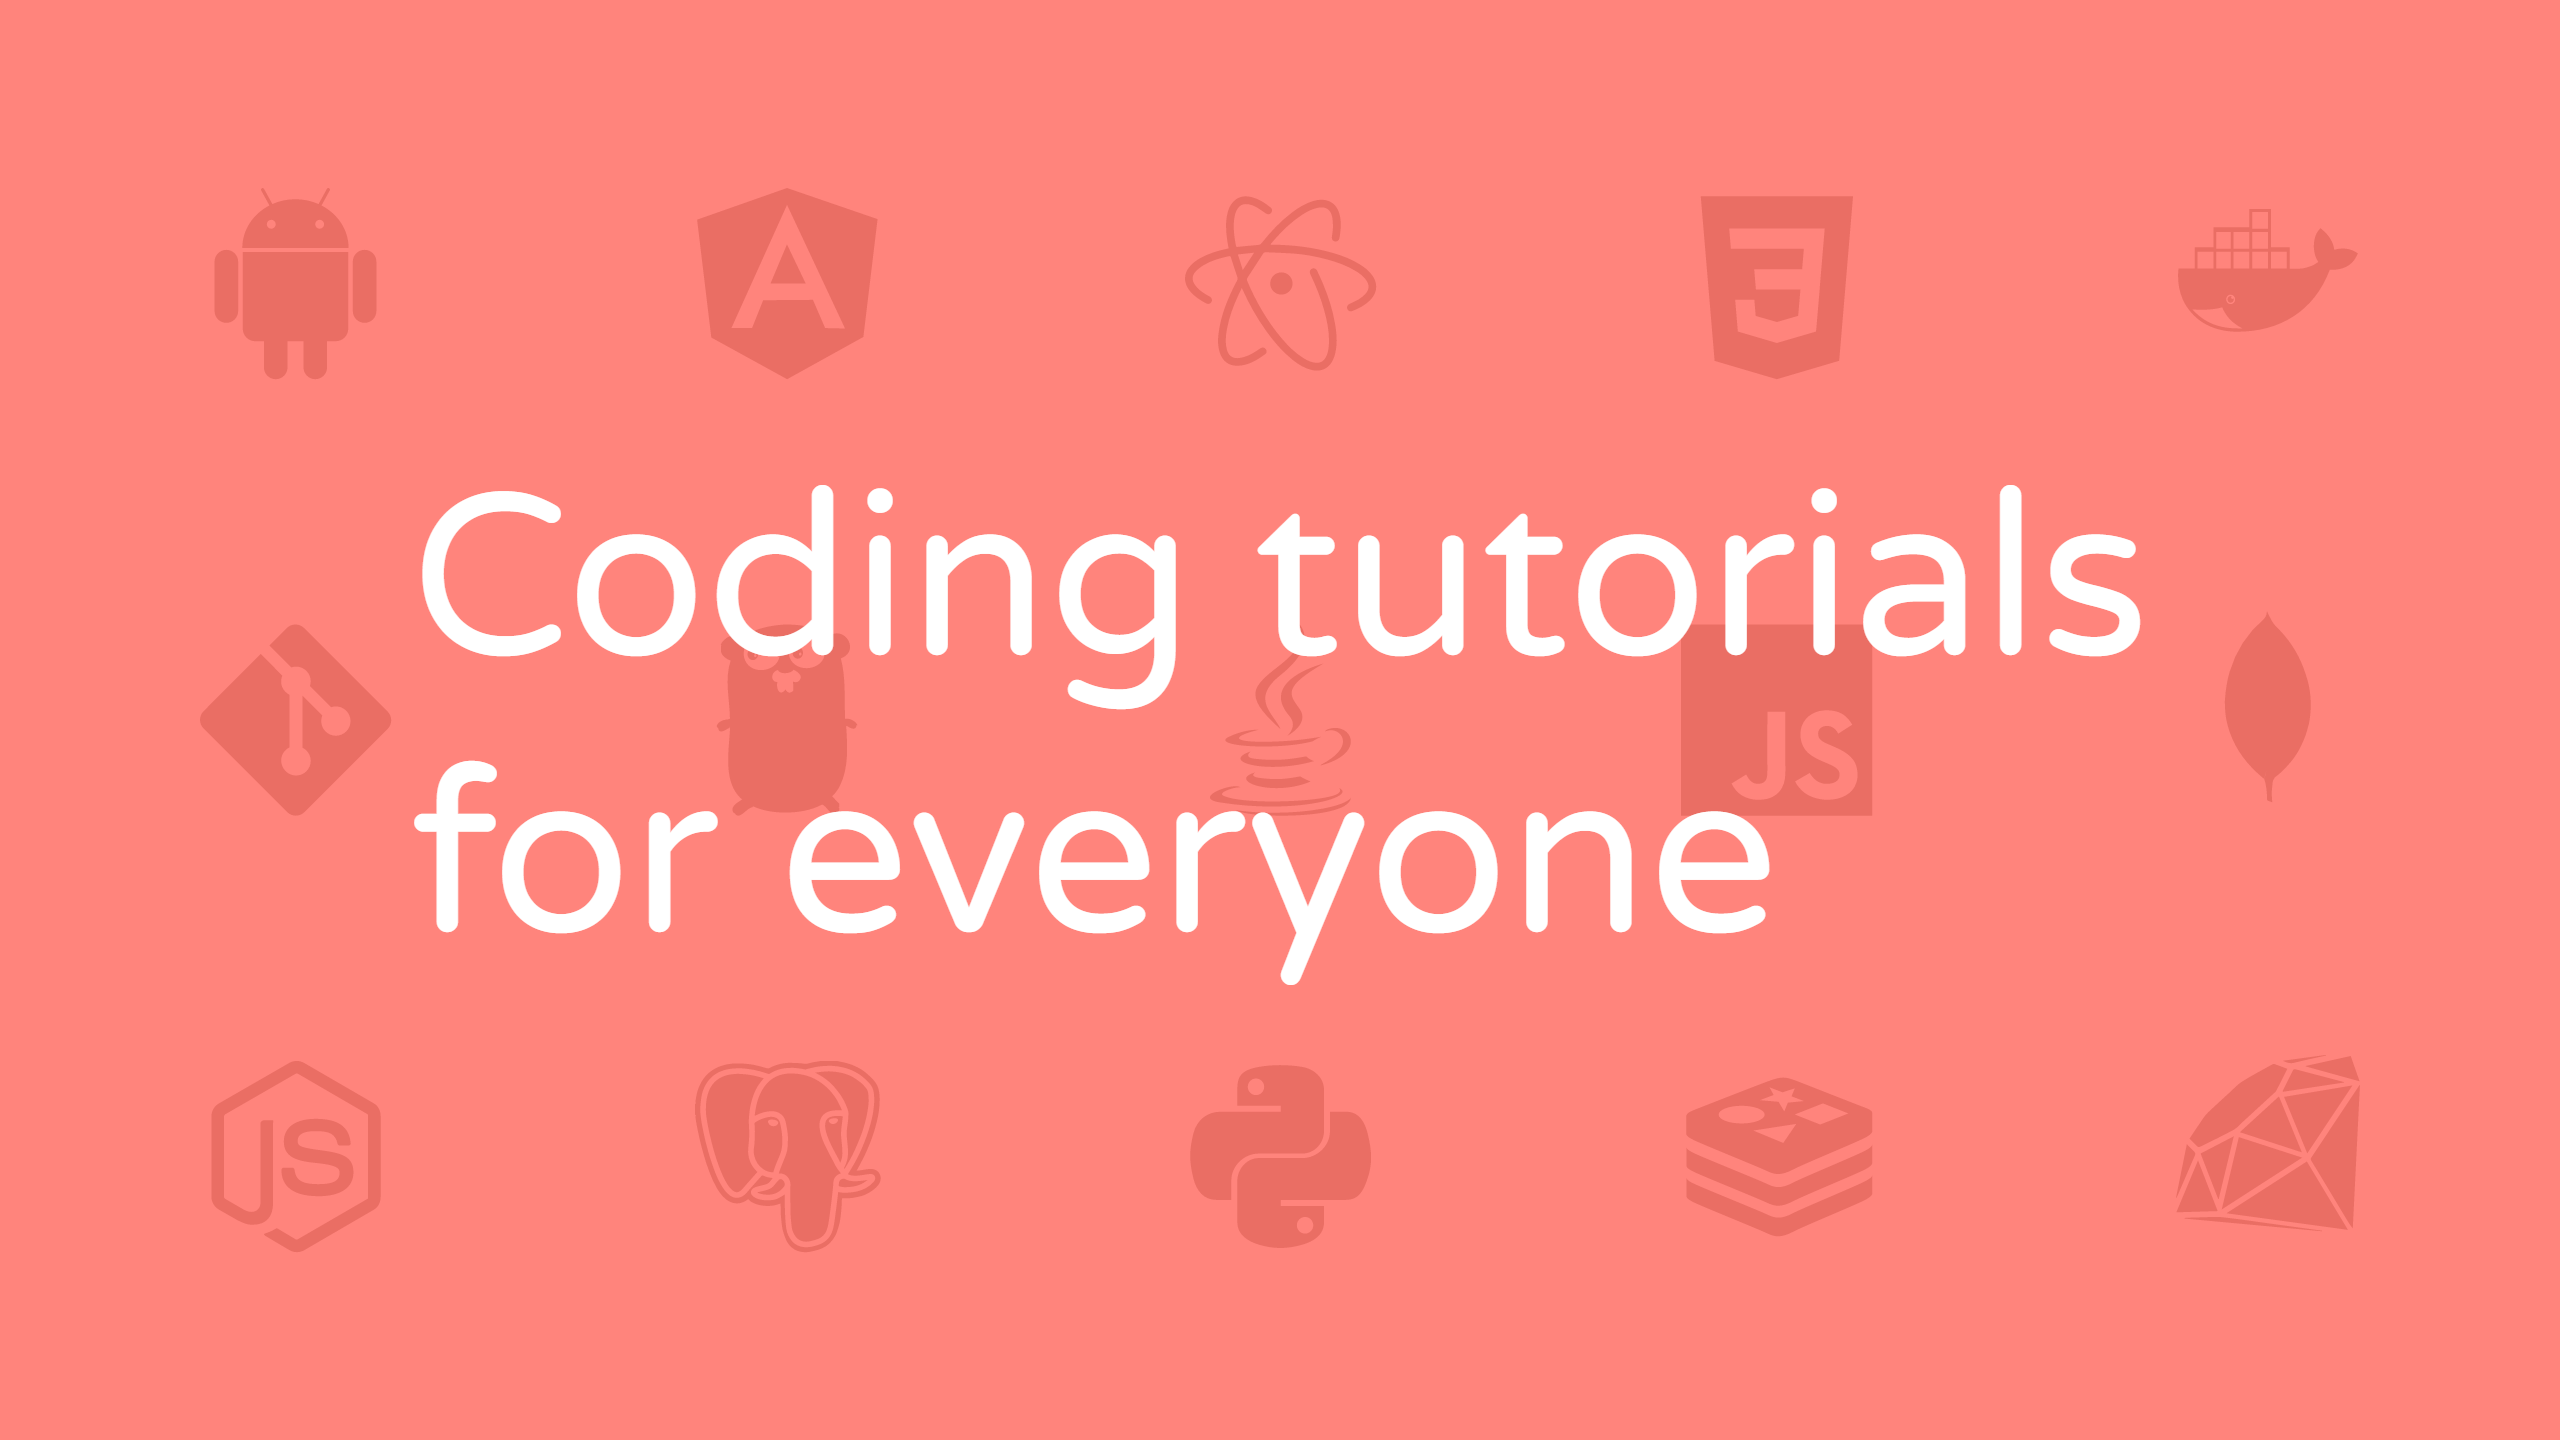 Coding tutorials for everyone